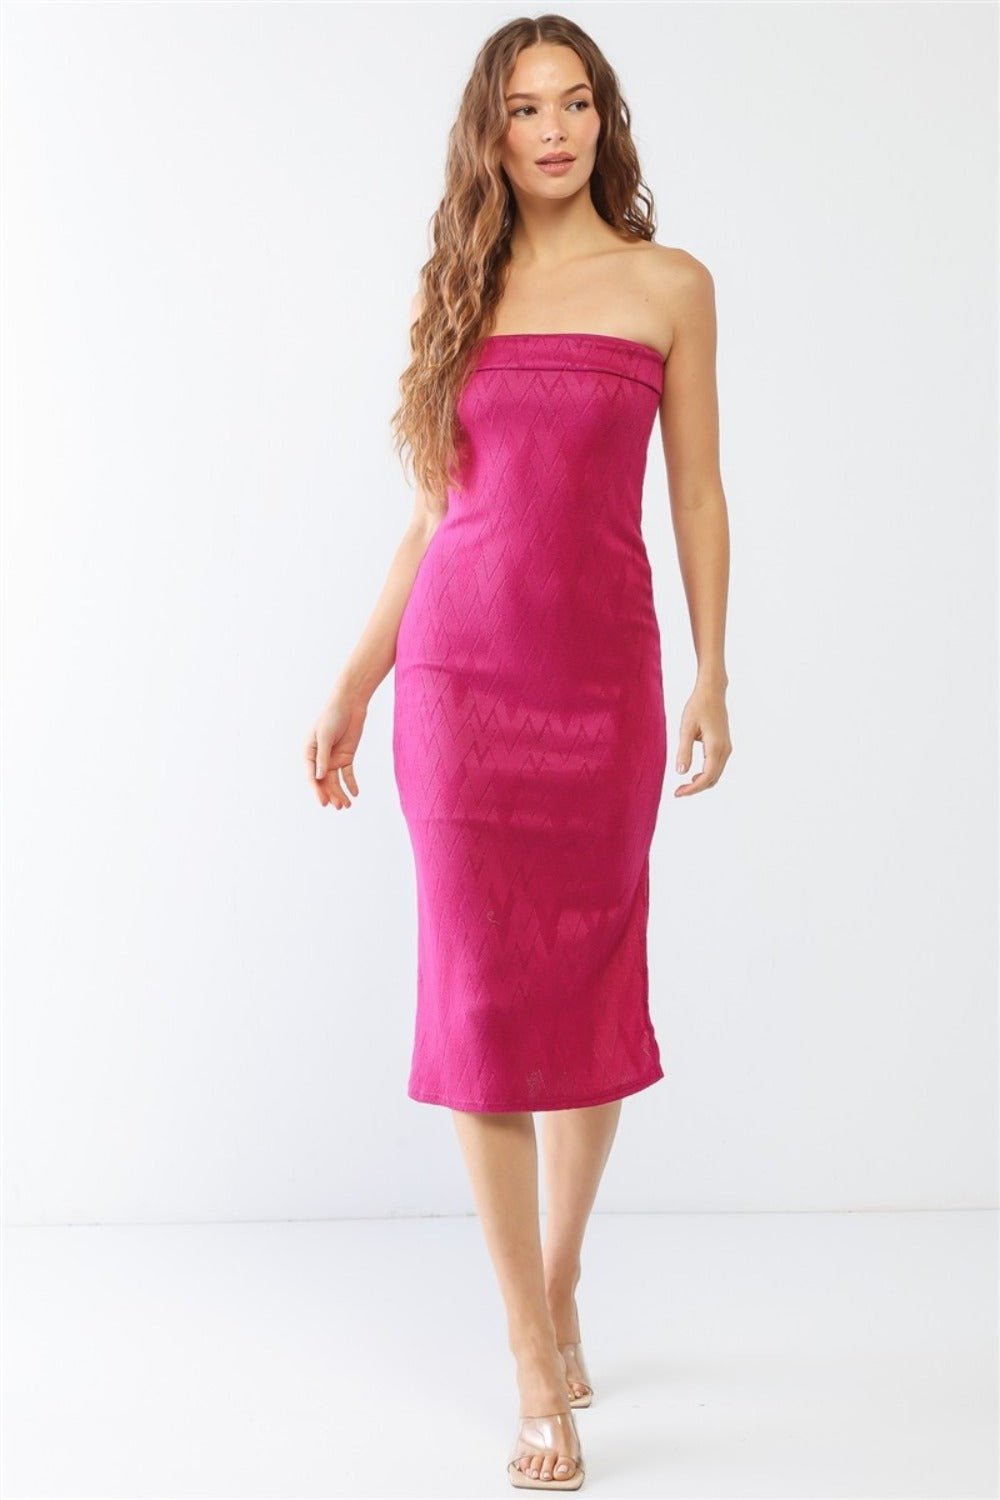 Le Lis Geometric Print Strapless Side Slit Dress - Happily Ever Atchison Shop Co.